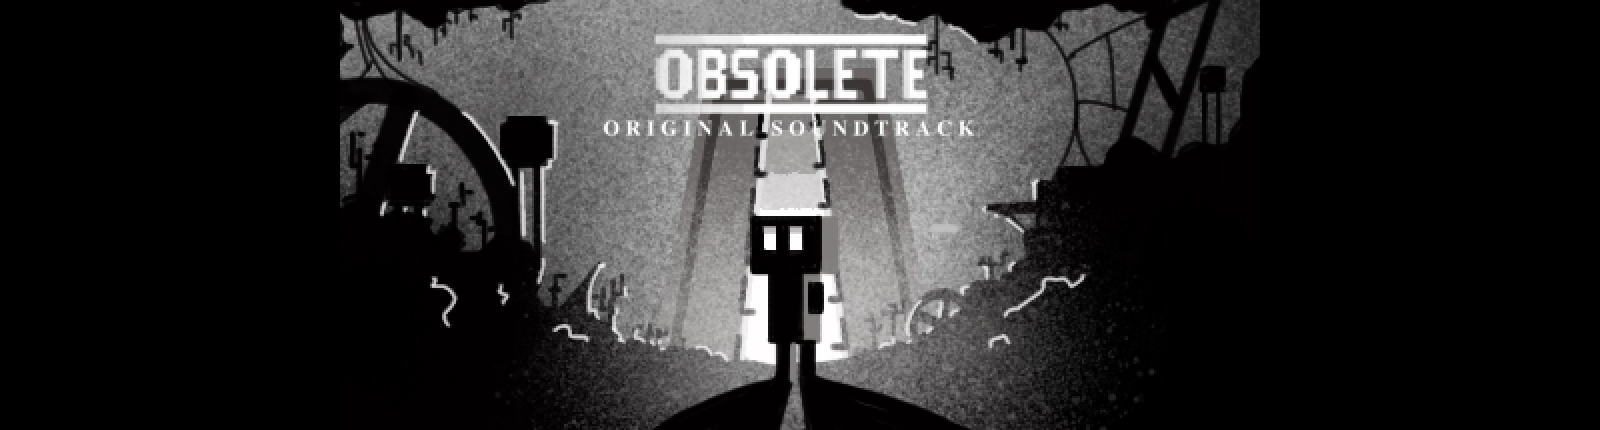 Obsolete Soundtrack